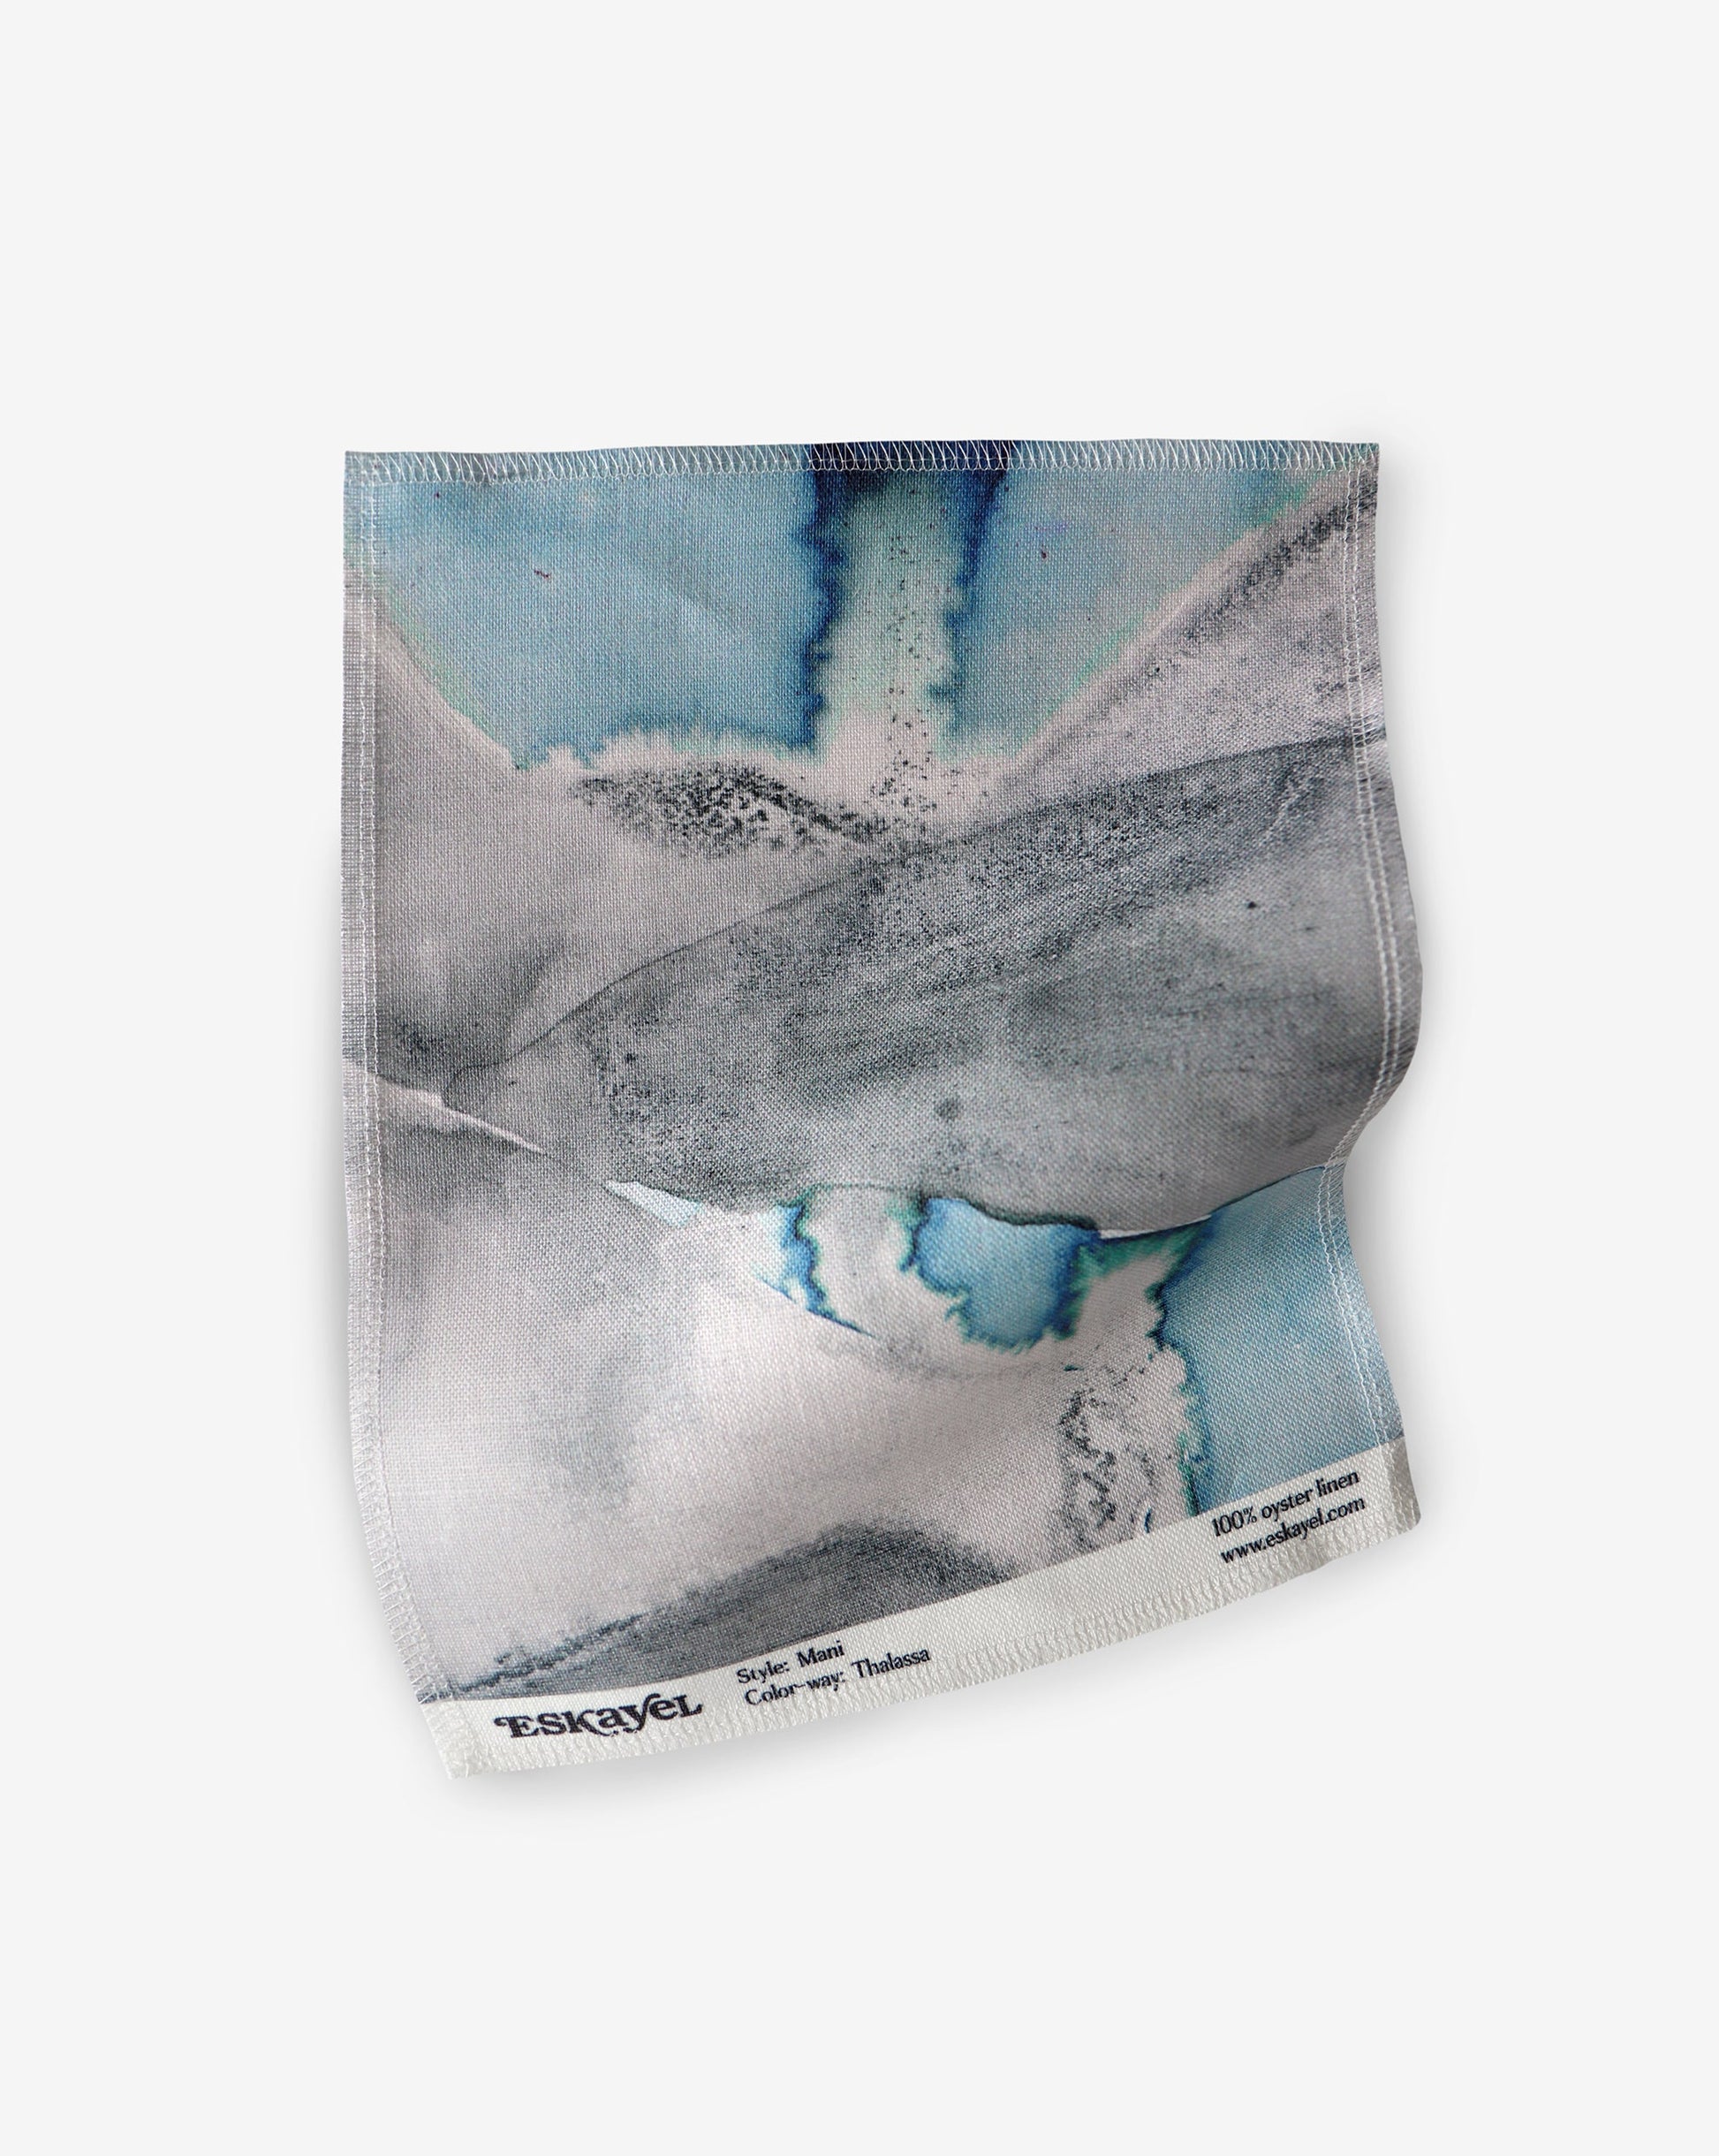 A blue and white design on a Mani Fabric Sample||Thalassa hand towel.